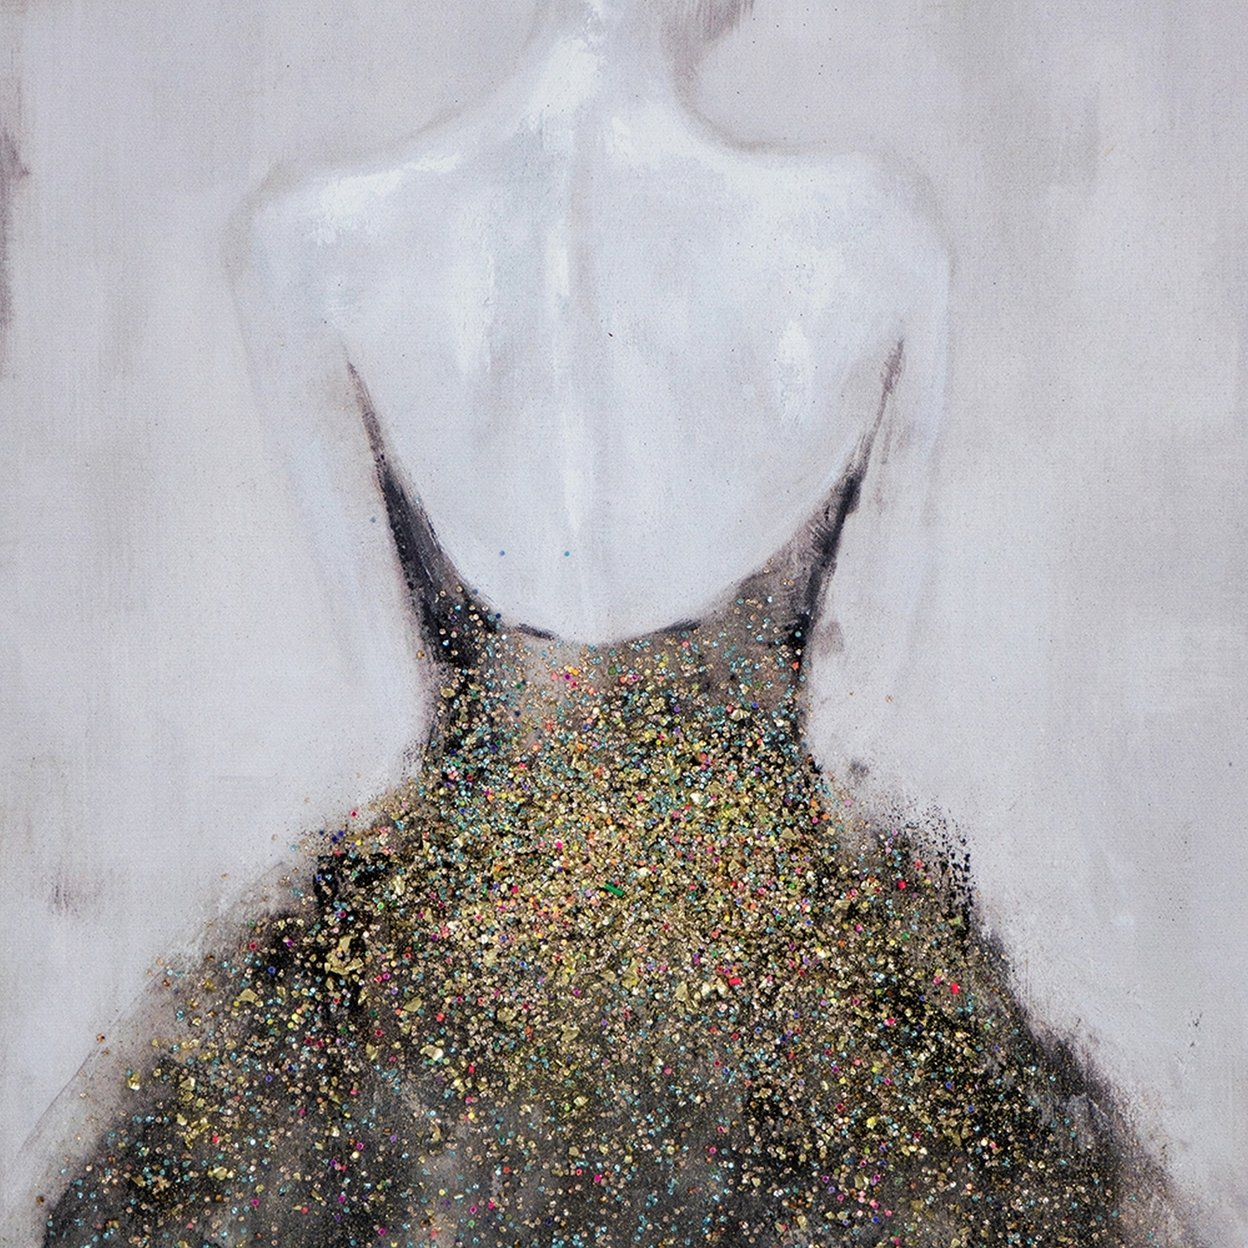 17 X 21 Rectangular Framed Art, Elegant Woman Facing Away, Gold, White- Saltoro Sherpi